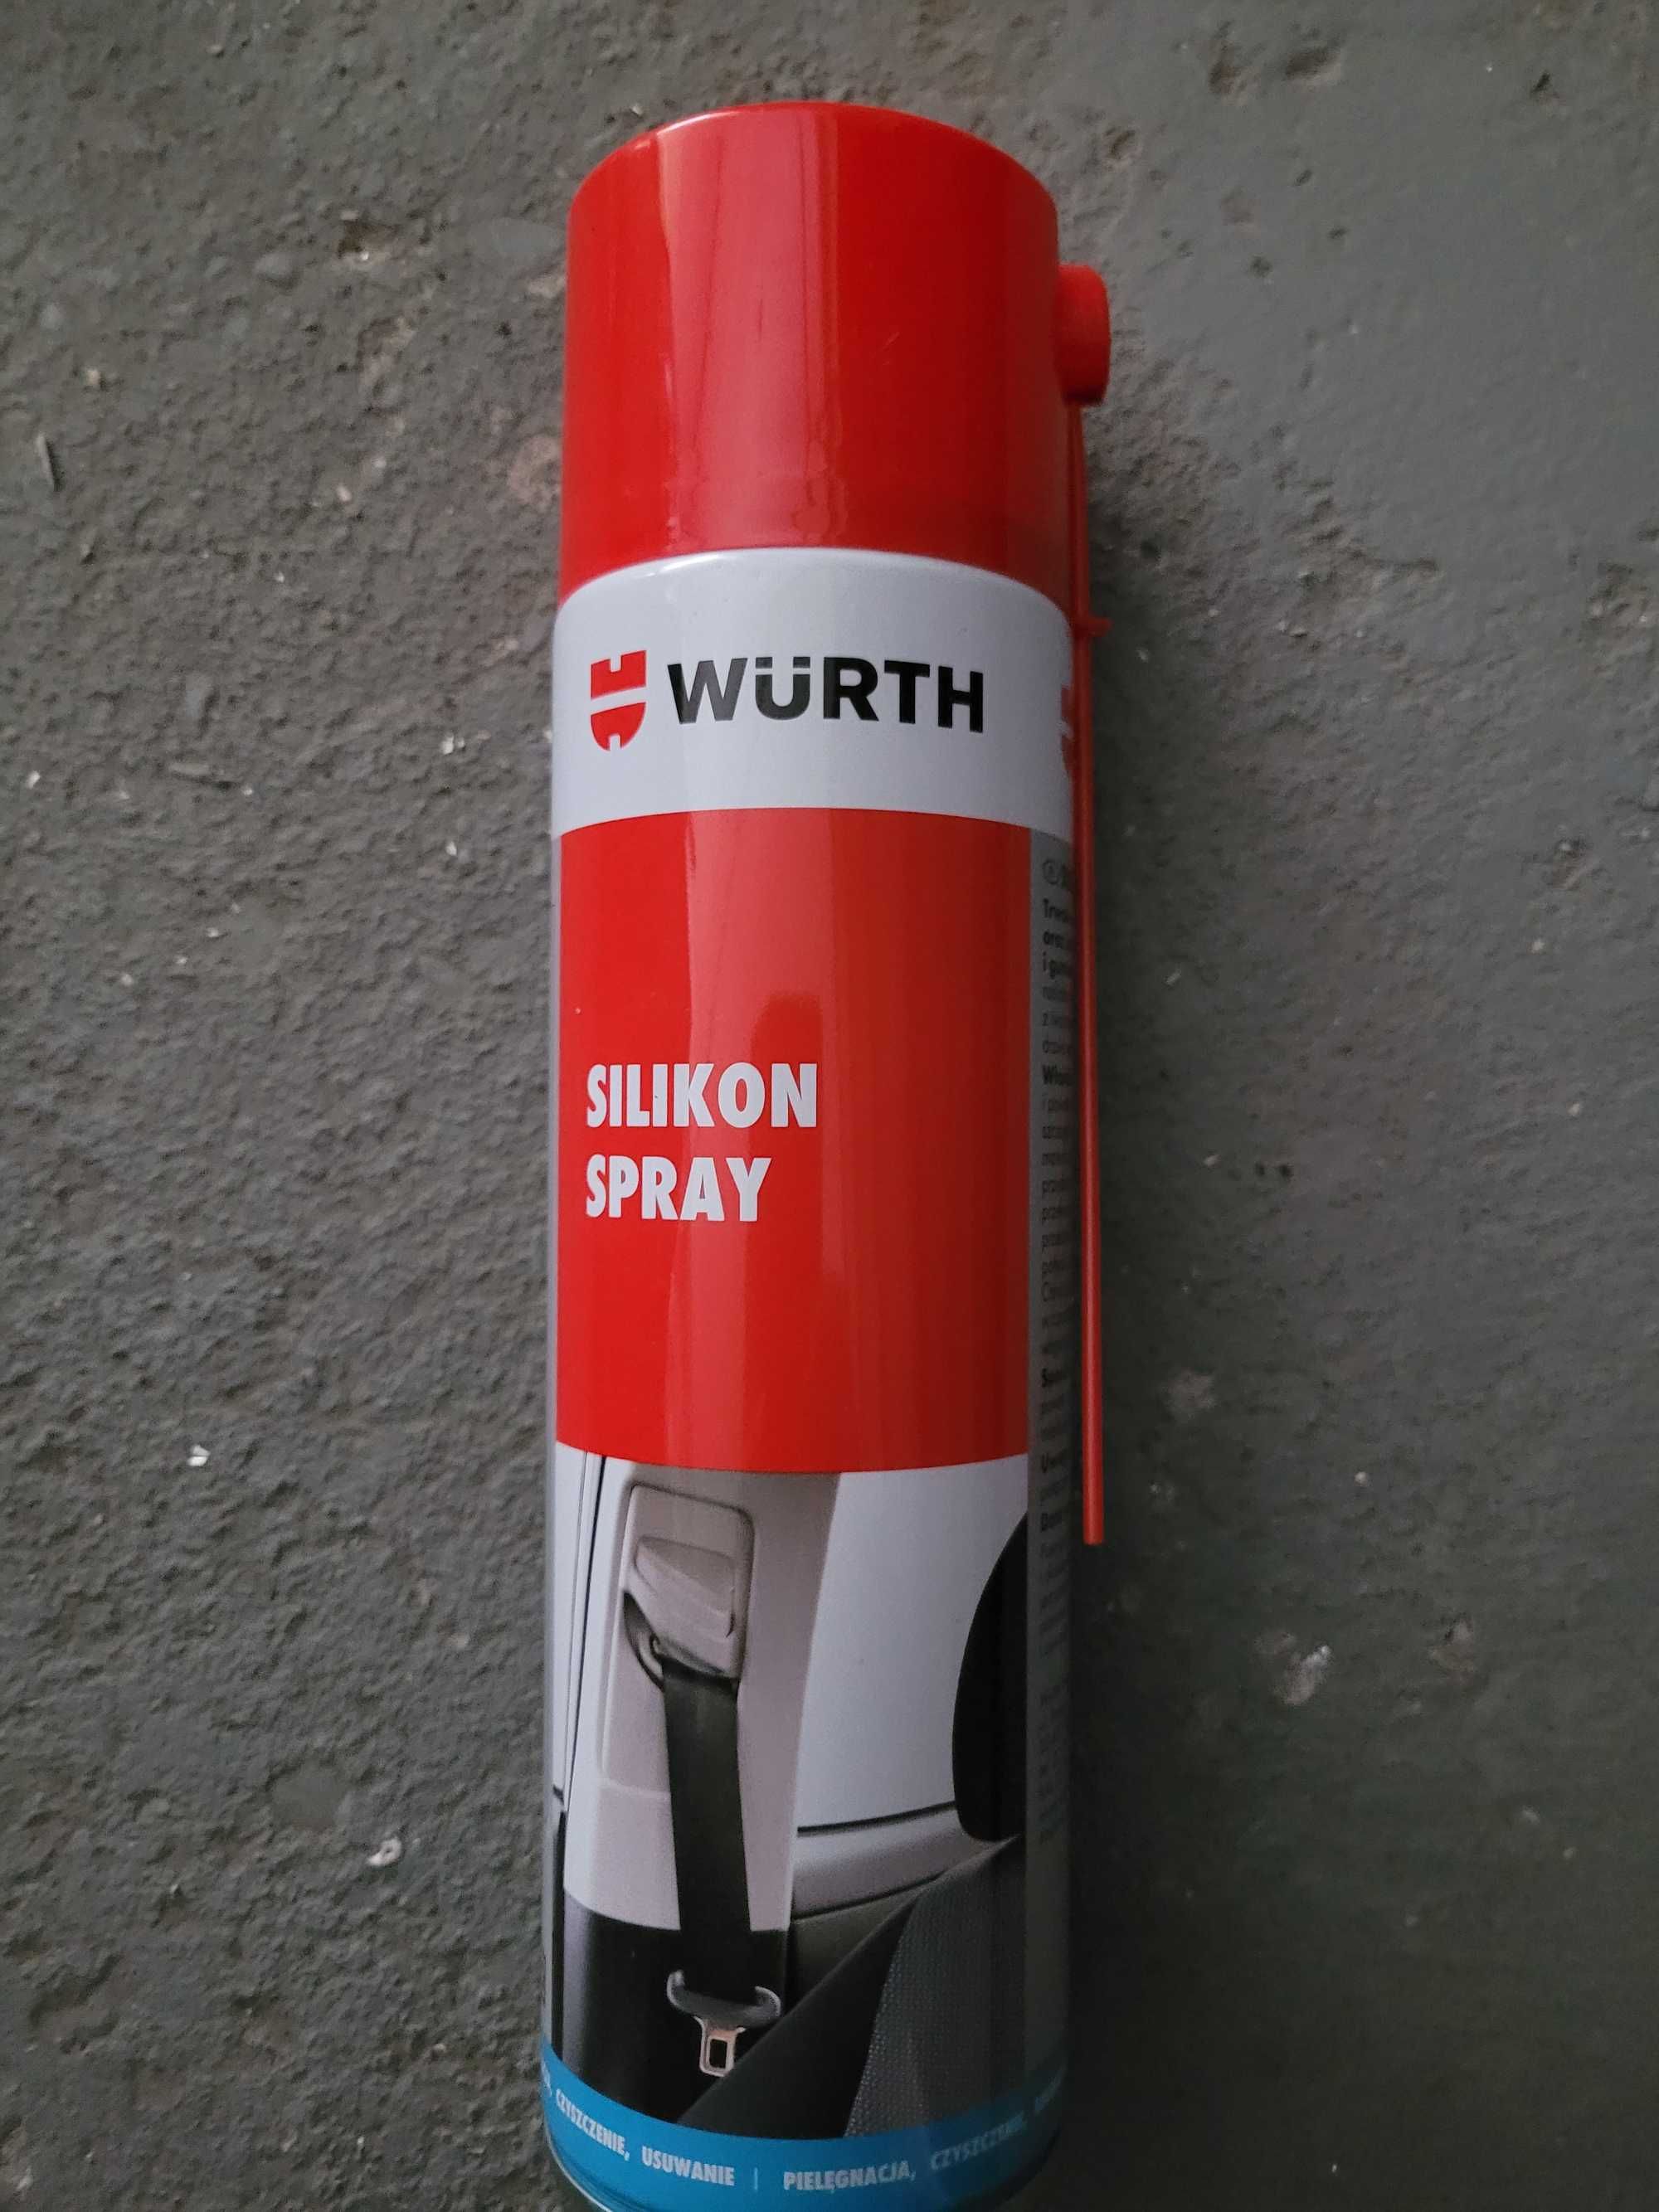 Wurth slikon spray 500ml